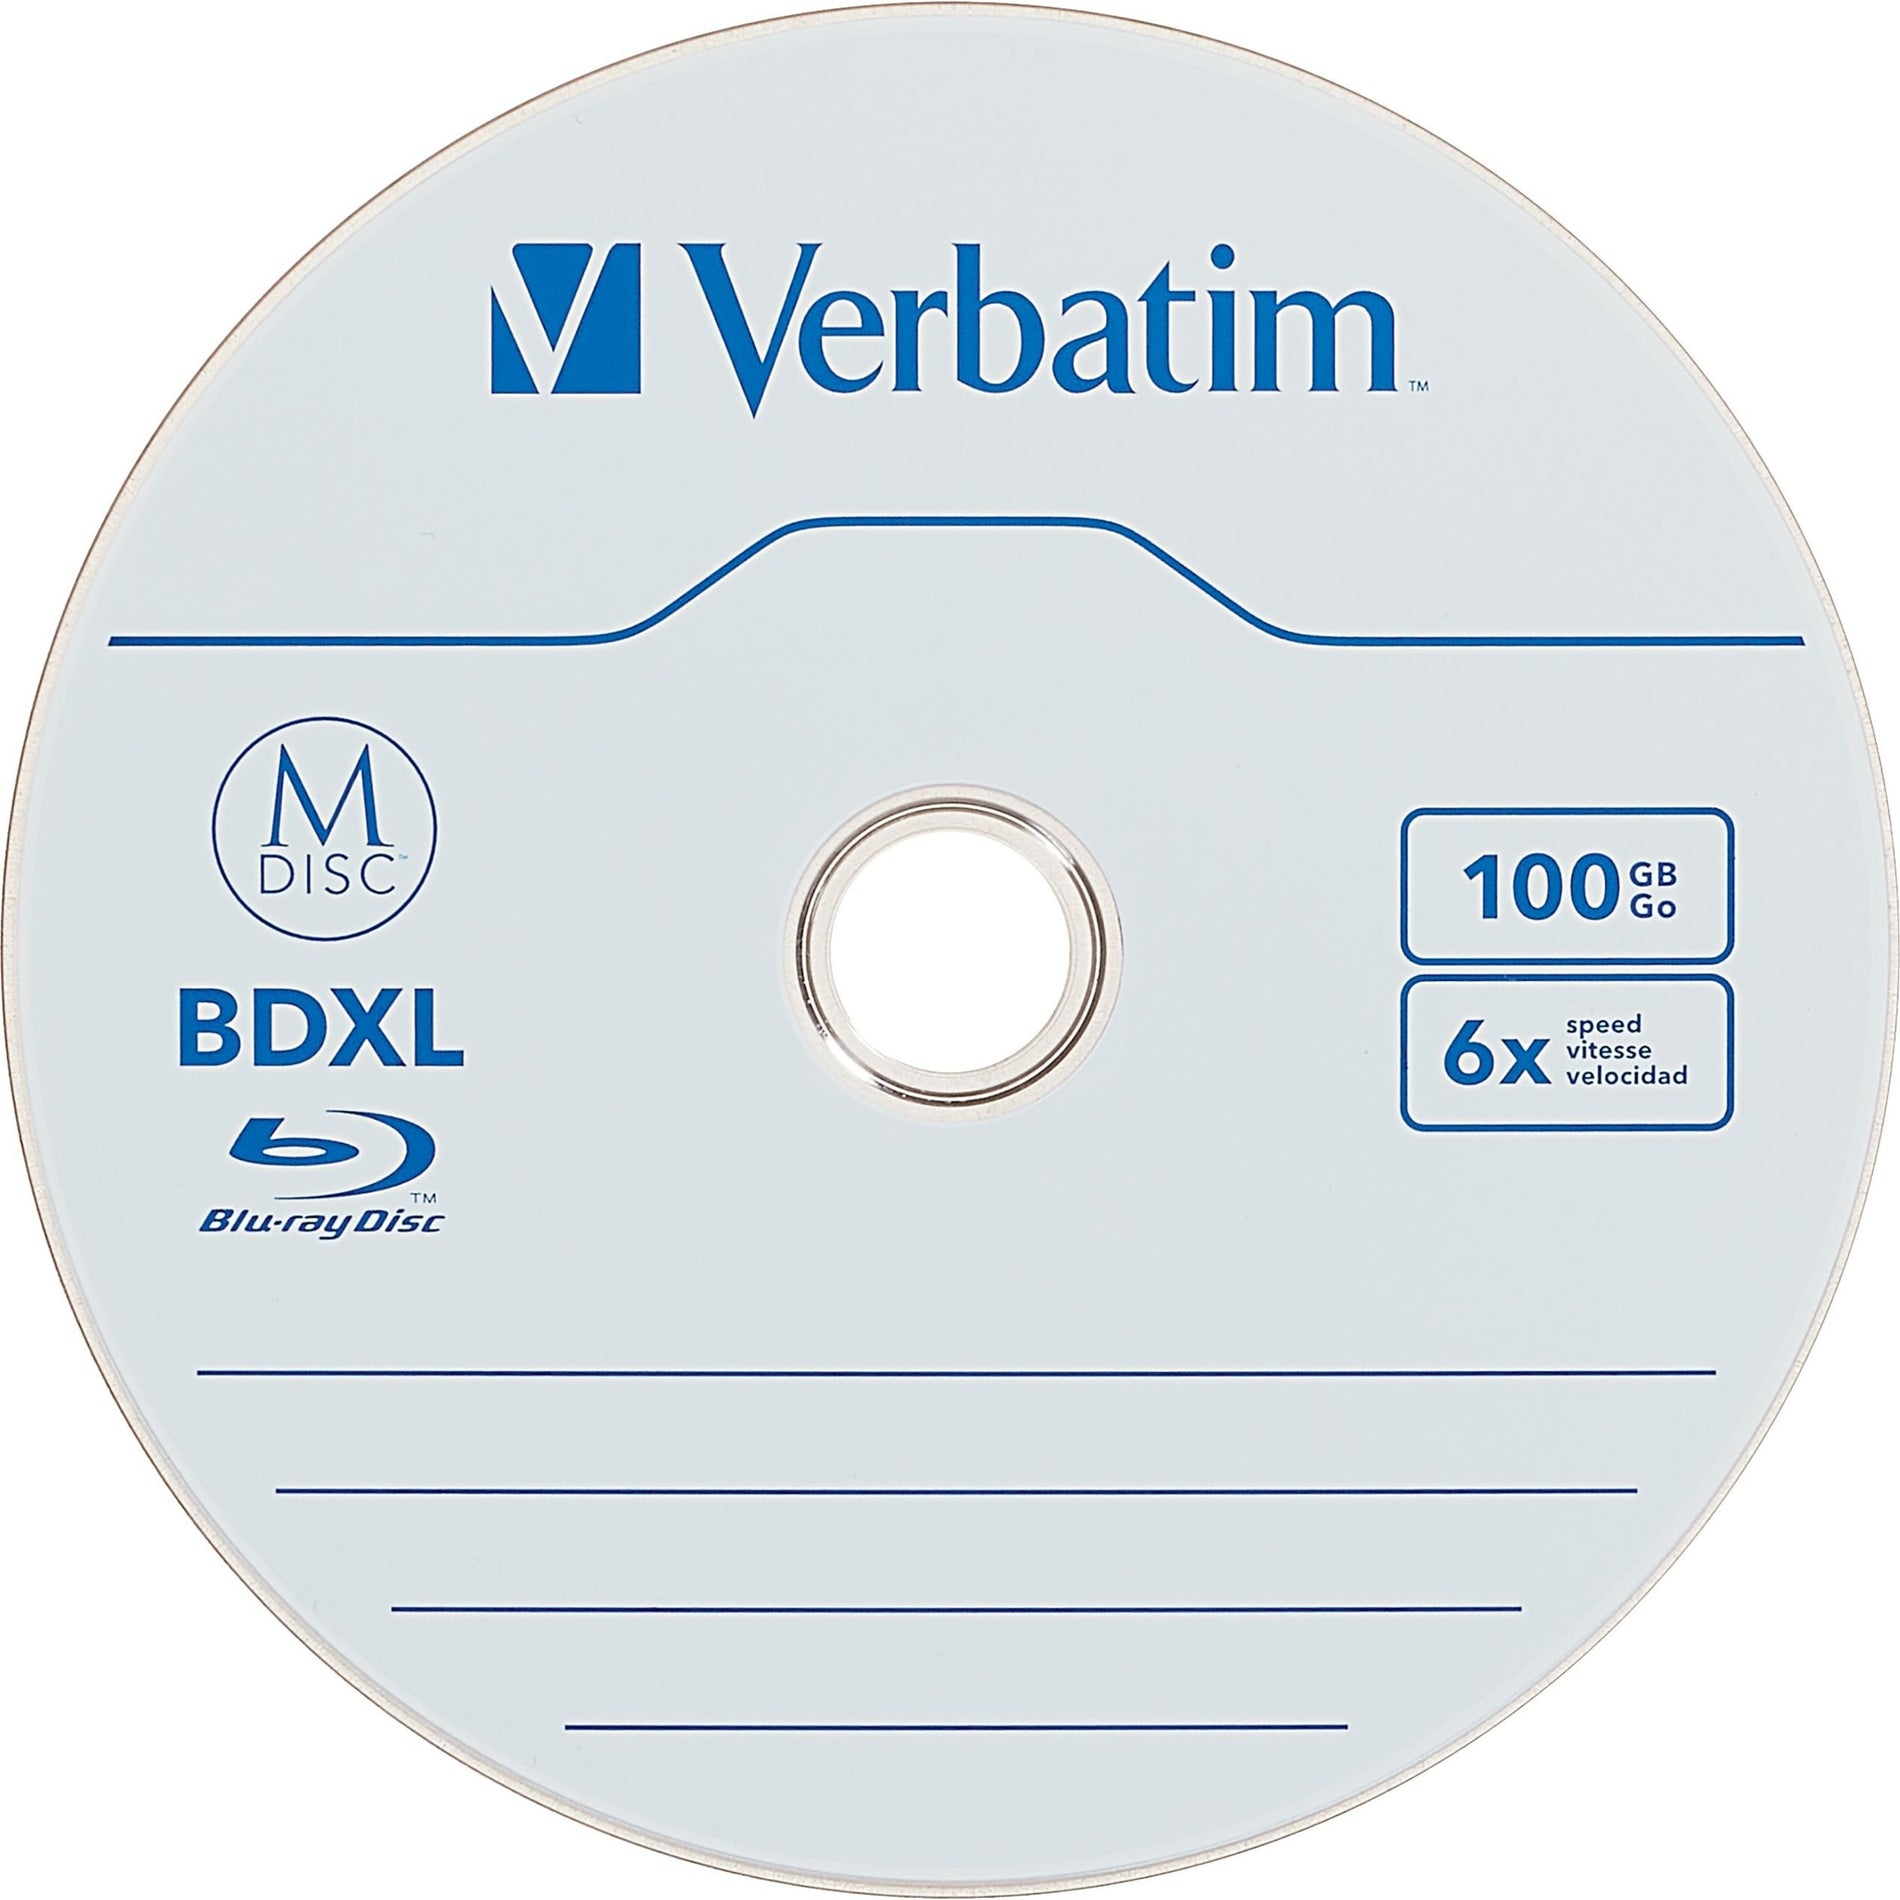 Verbatim 98913 M DISC BD-R XL 100GB 6X Lifetime Archival 5PK J/C, Blu-ray Recordable Media